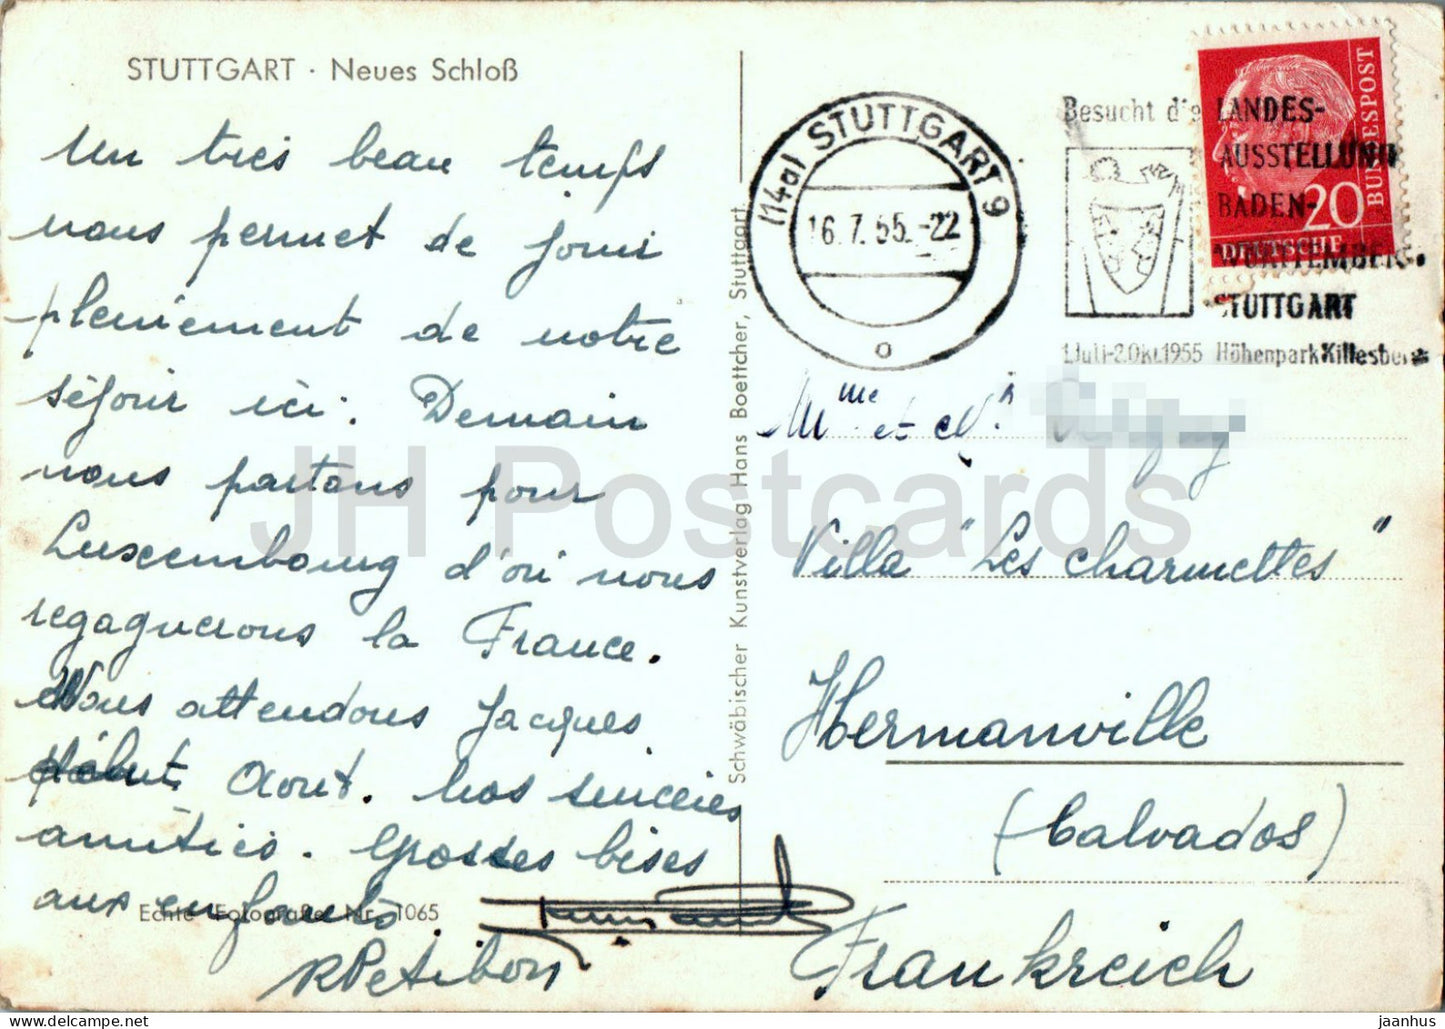 Stuttgart - Neues Schloss - 1065 - old postcard - 1955 - Germany - used